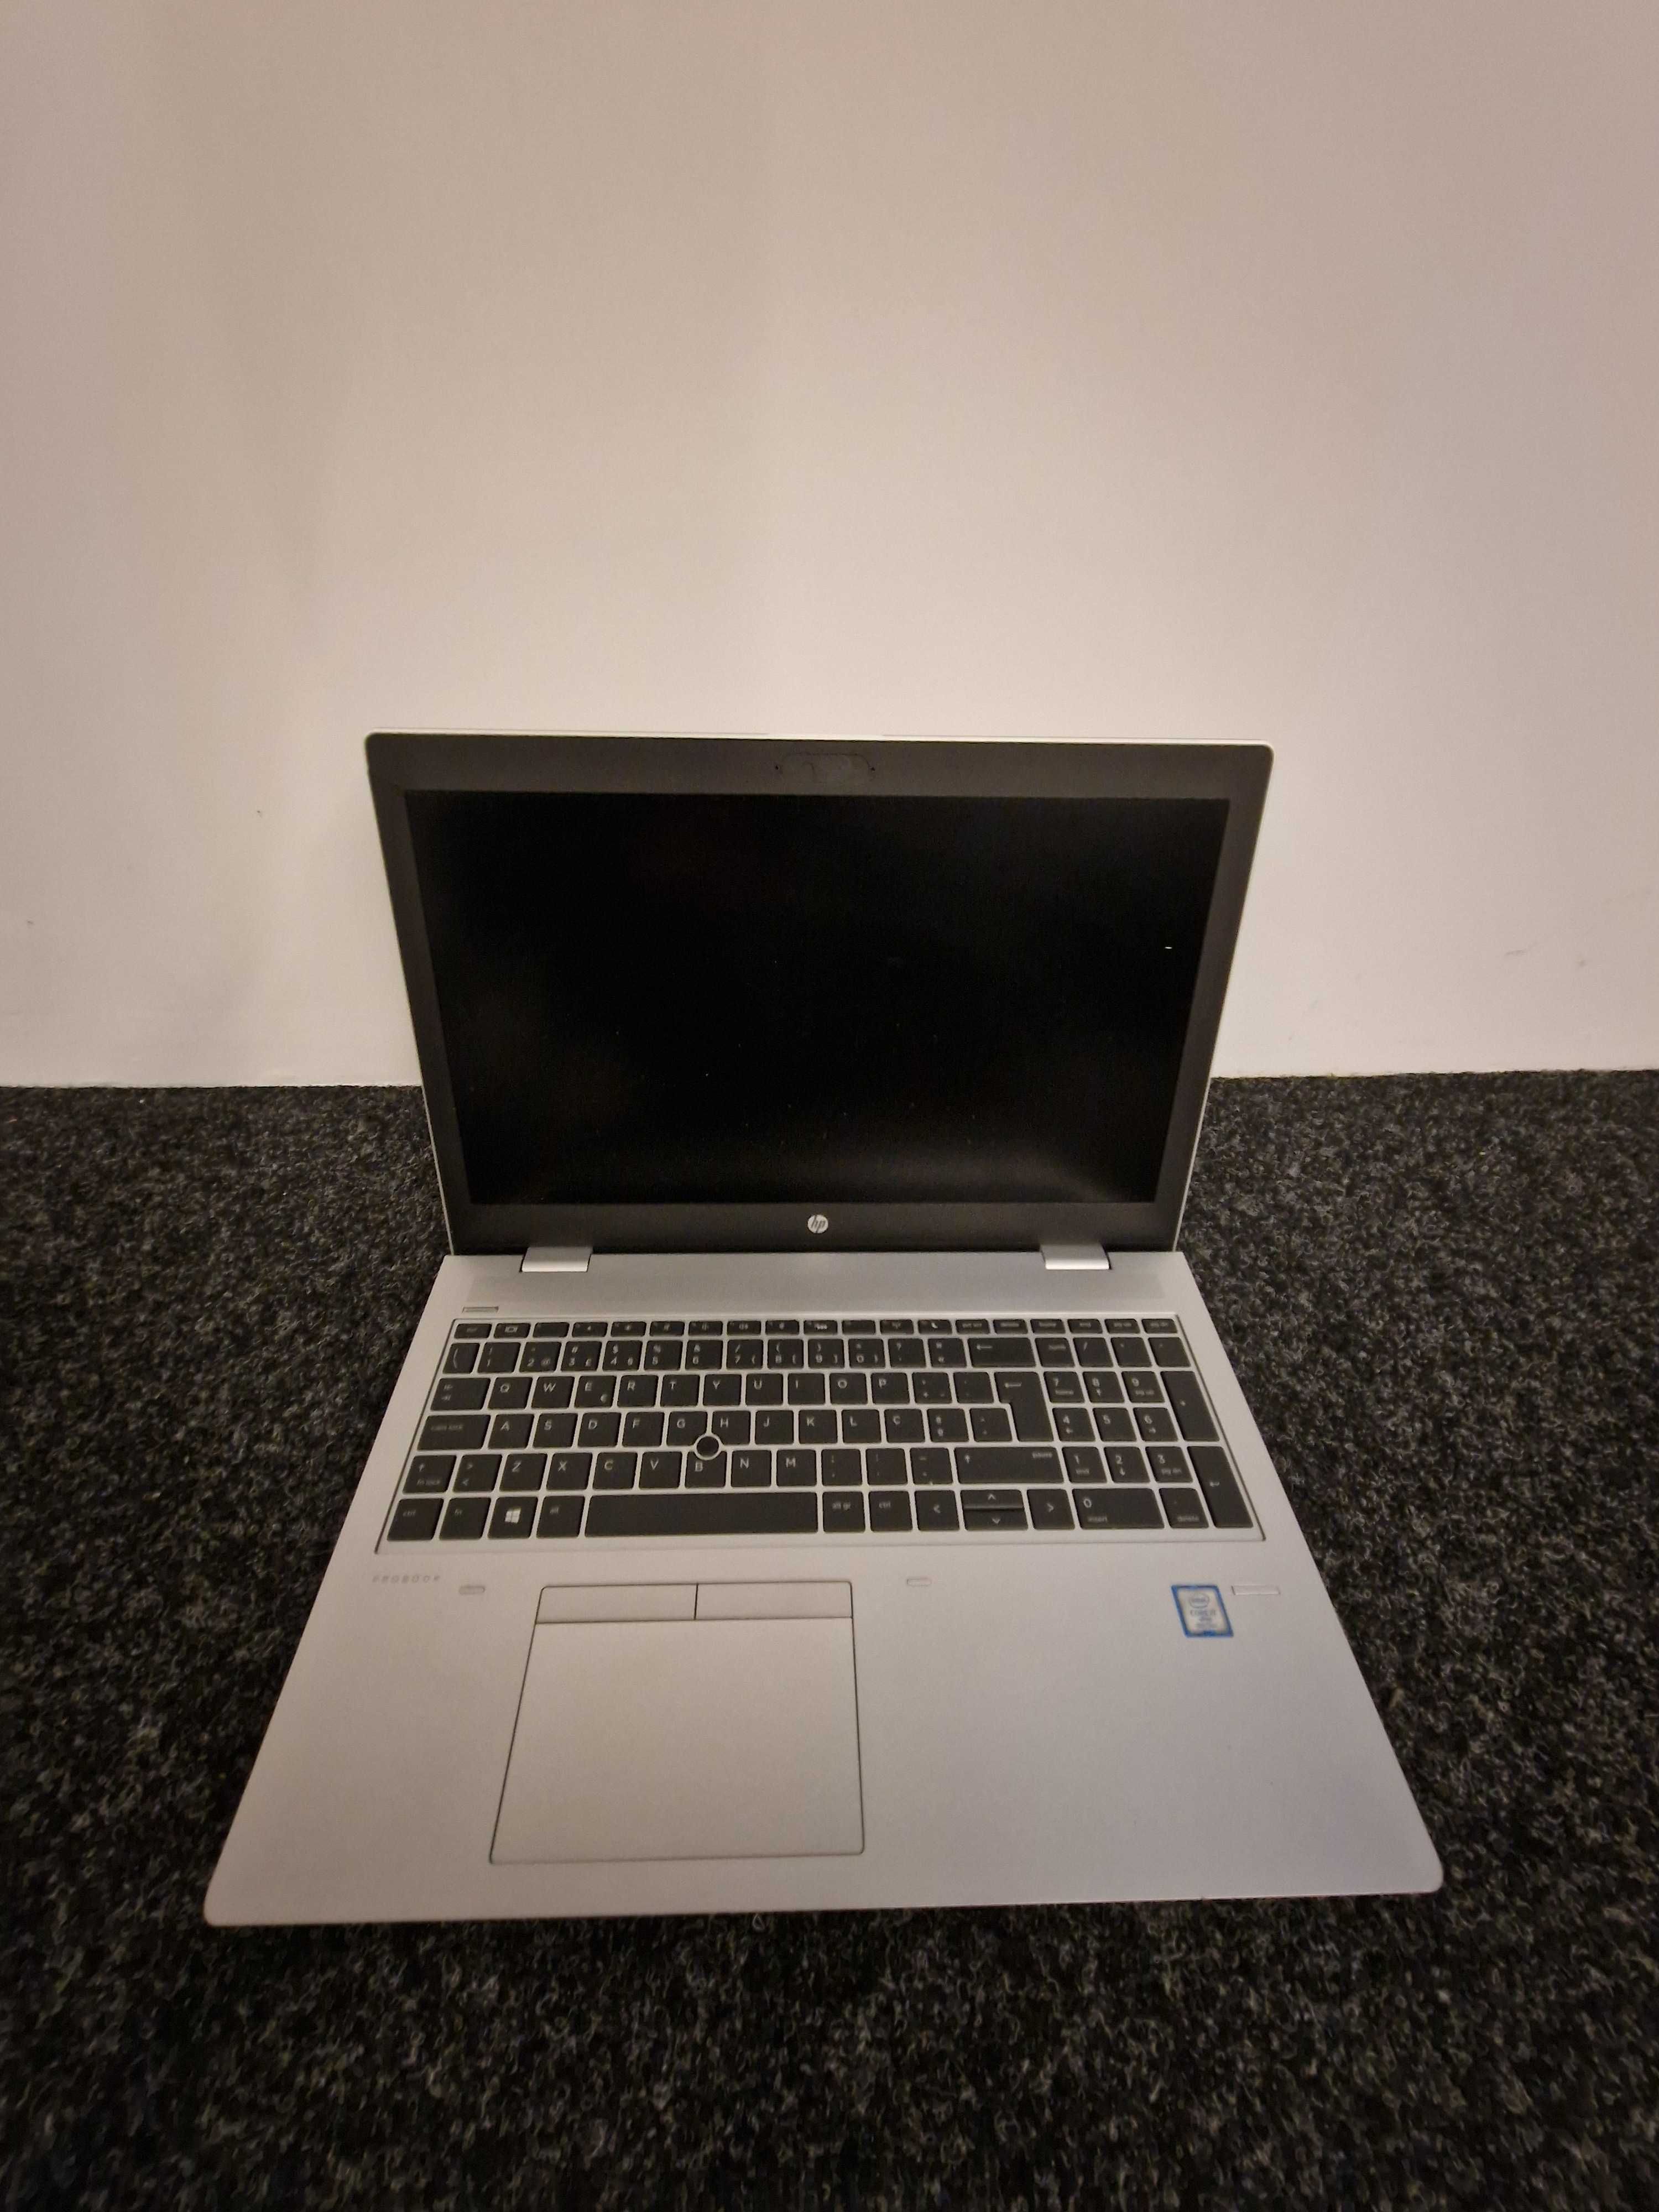 Portátil HP ProBook 650 G4